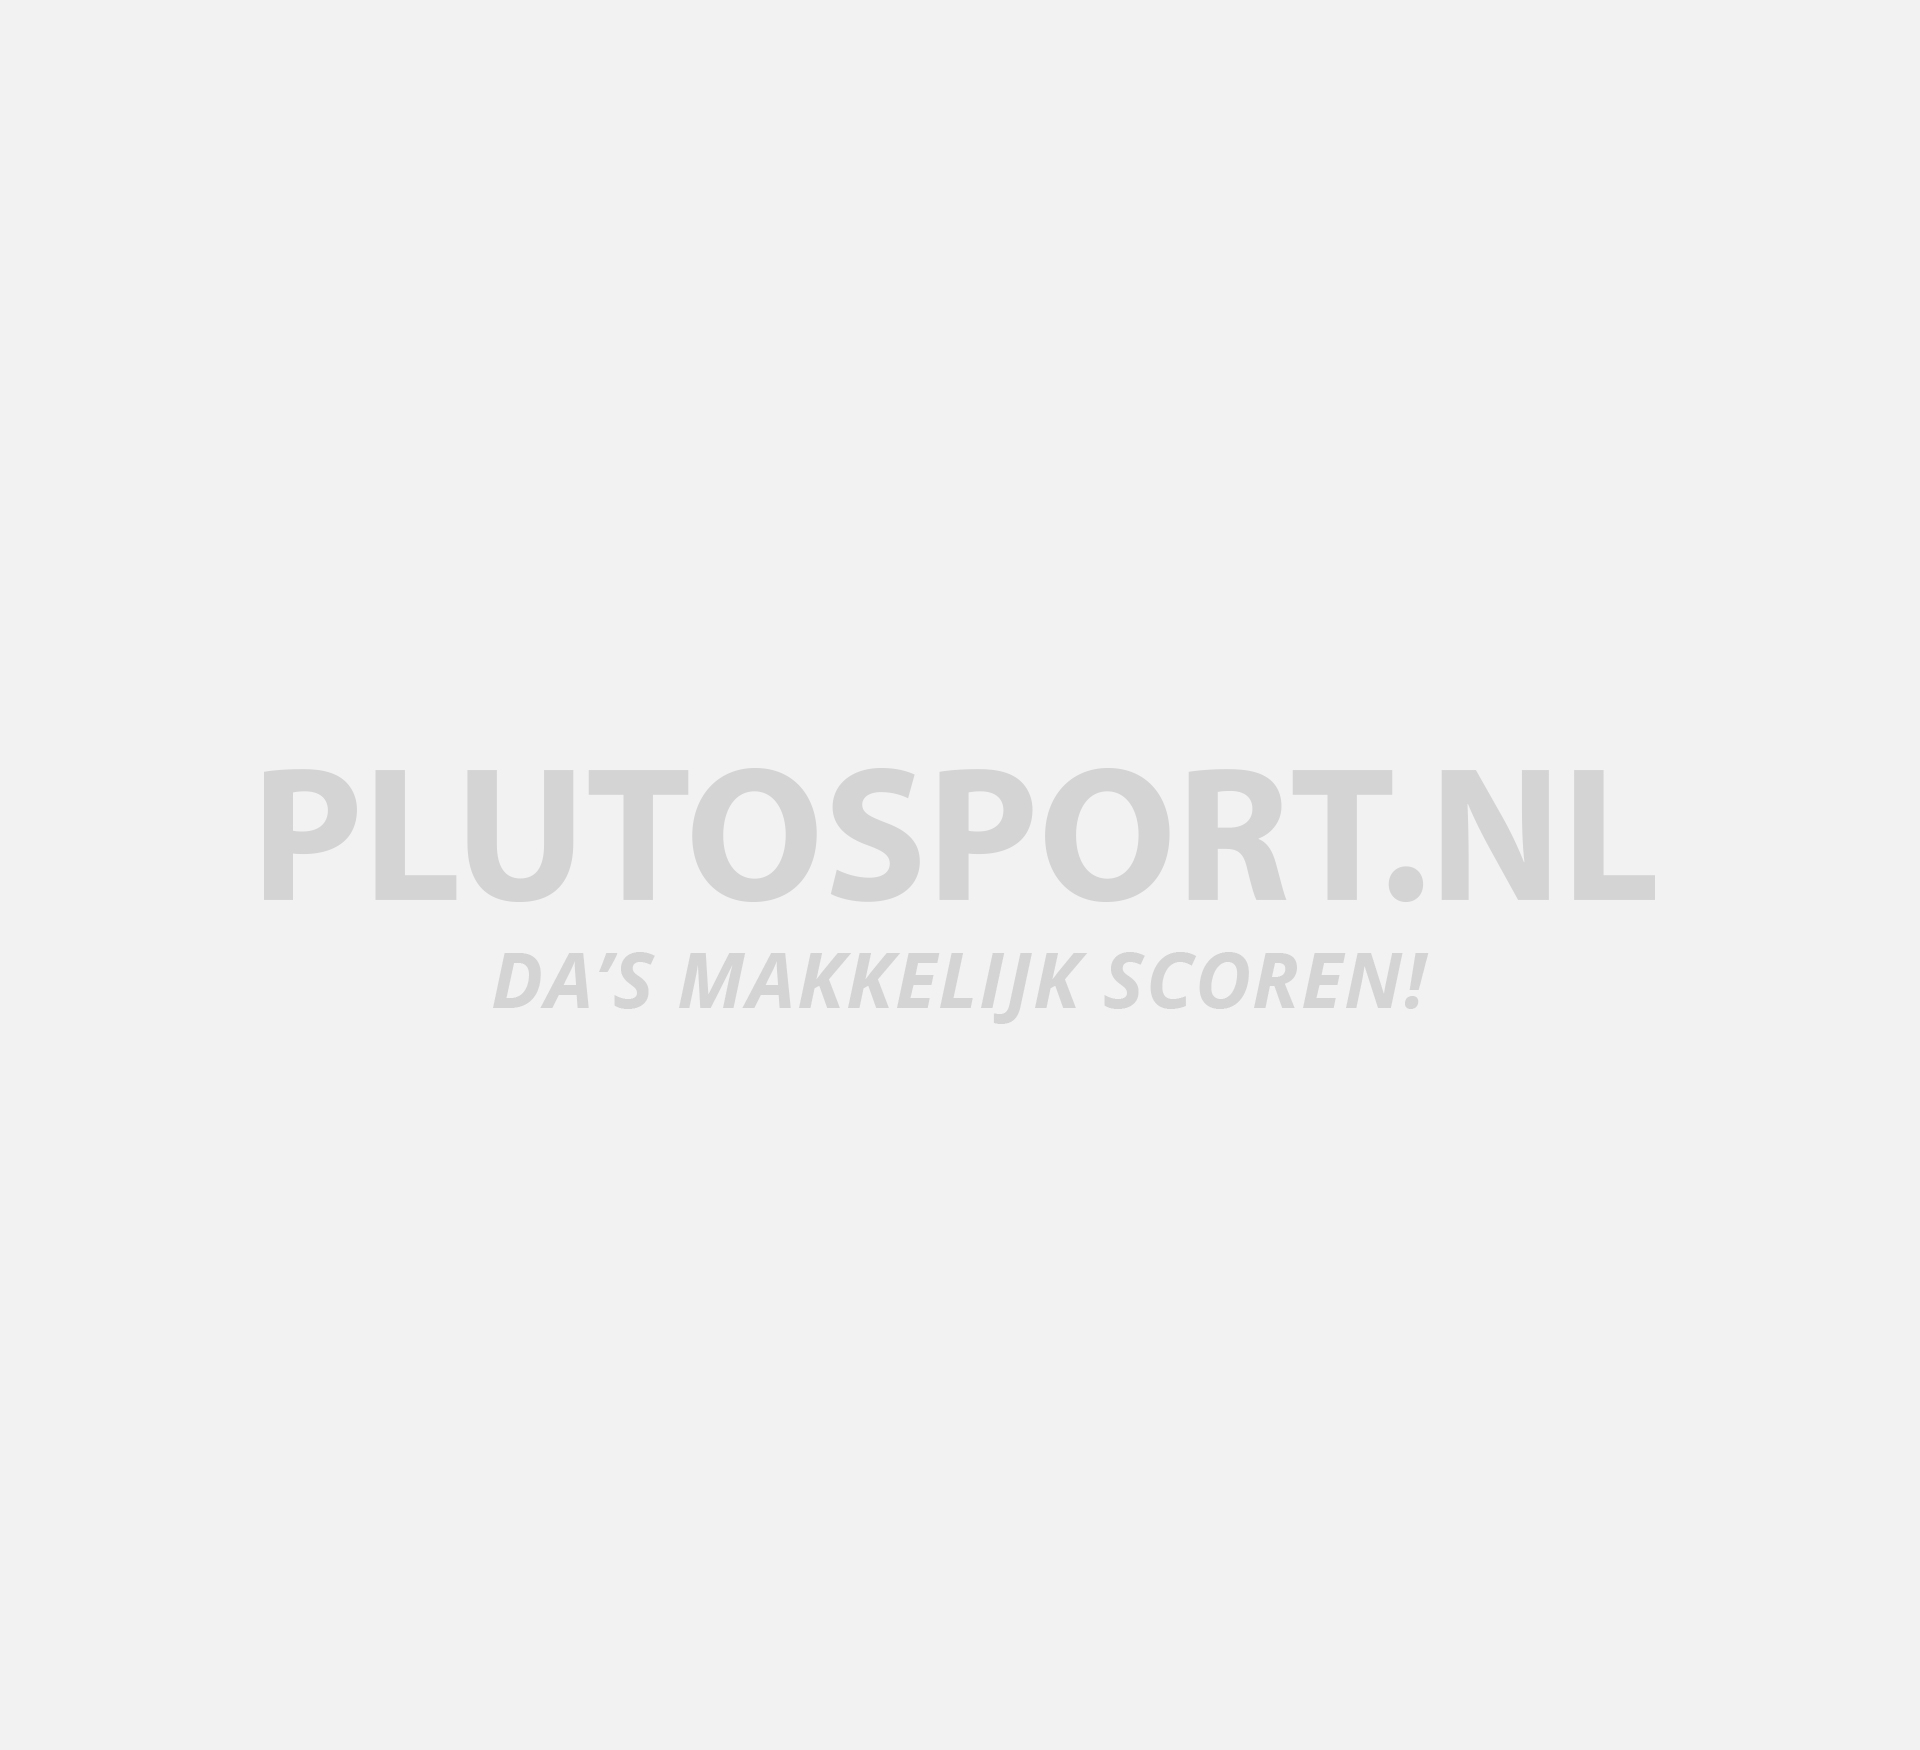 Intensief reflecteren medaillewinnaar Nike Air Max 90 LTR Sneakers Heren | Plutosport